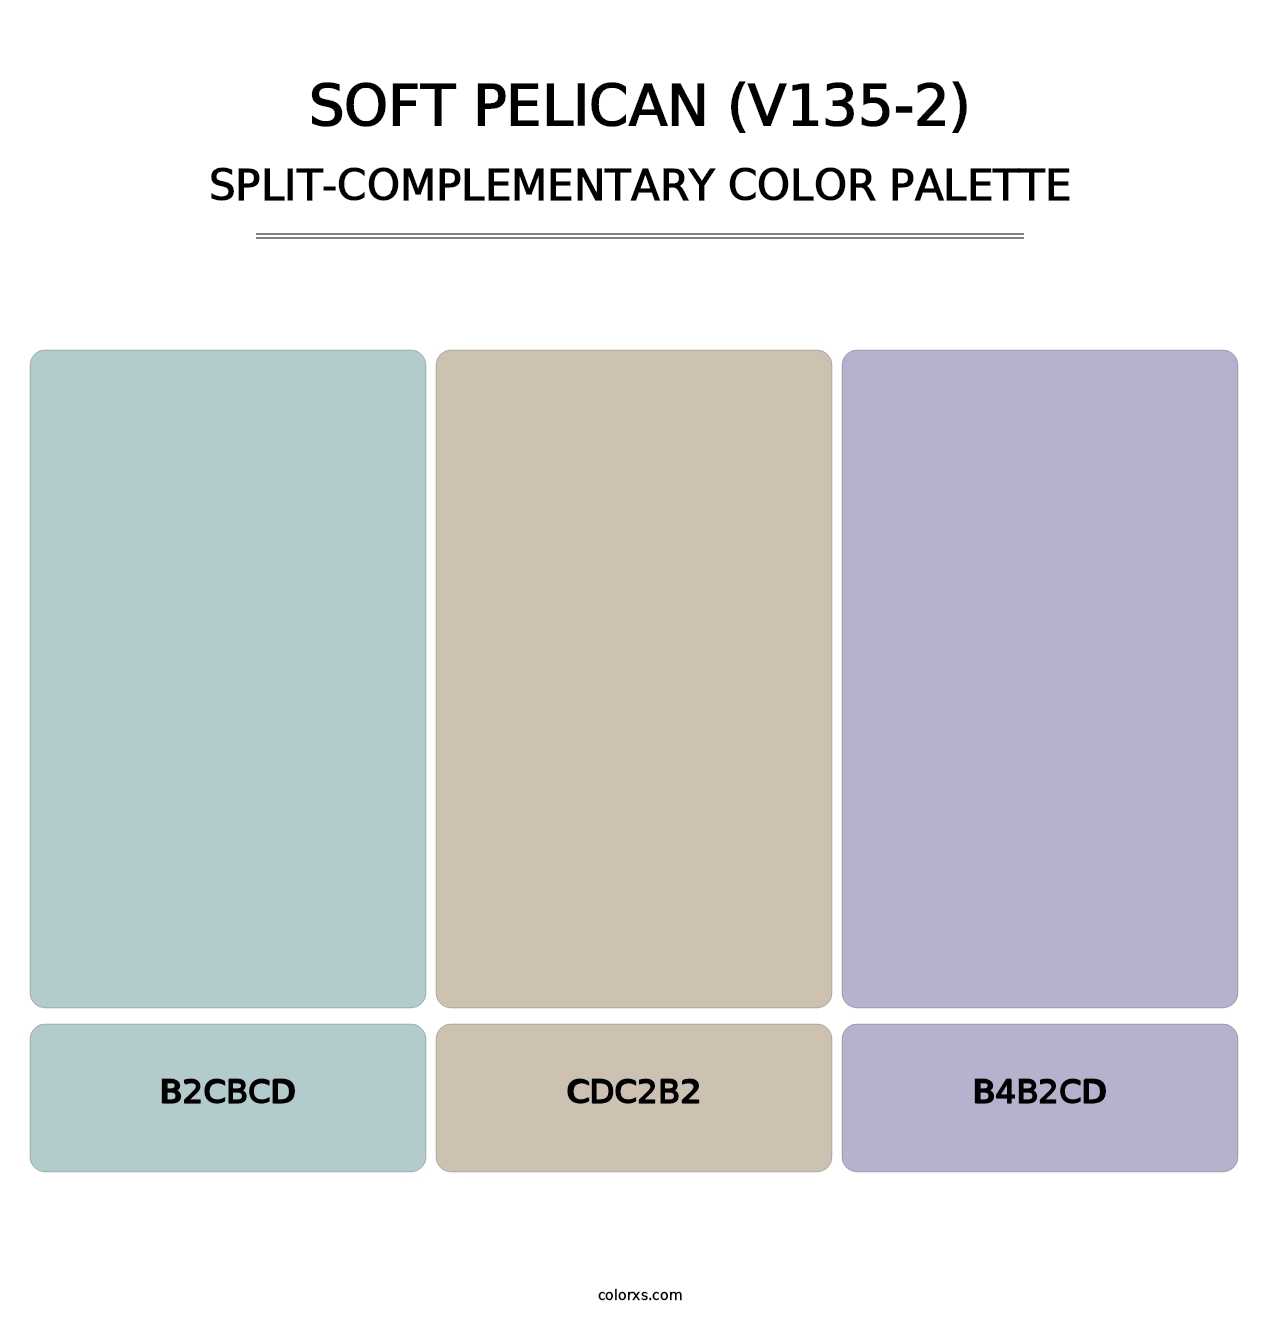 Soft Pelican (V135-2) - Split-Complementary Color Palette